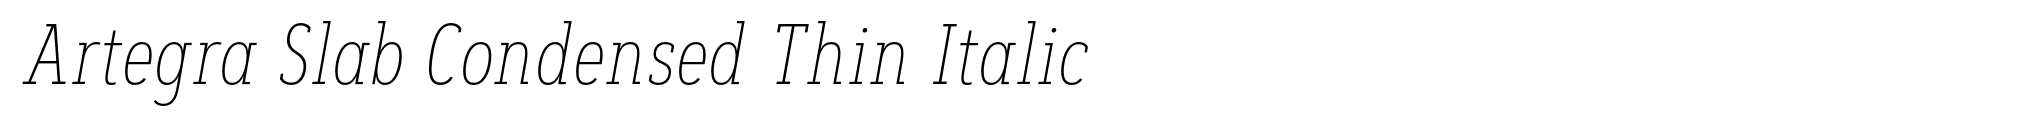 Artegra Slab Condensed Thin Italic image